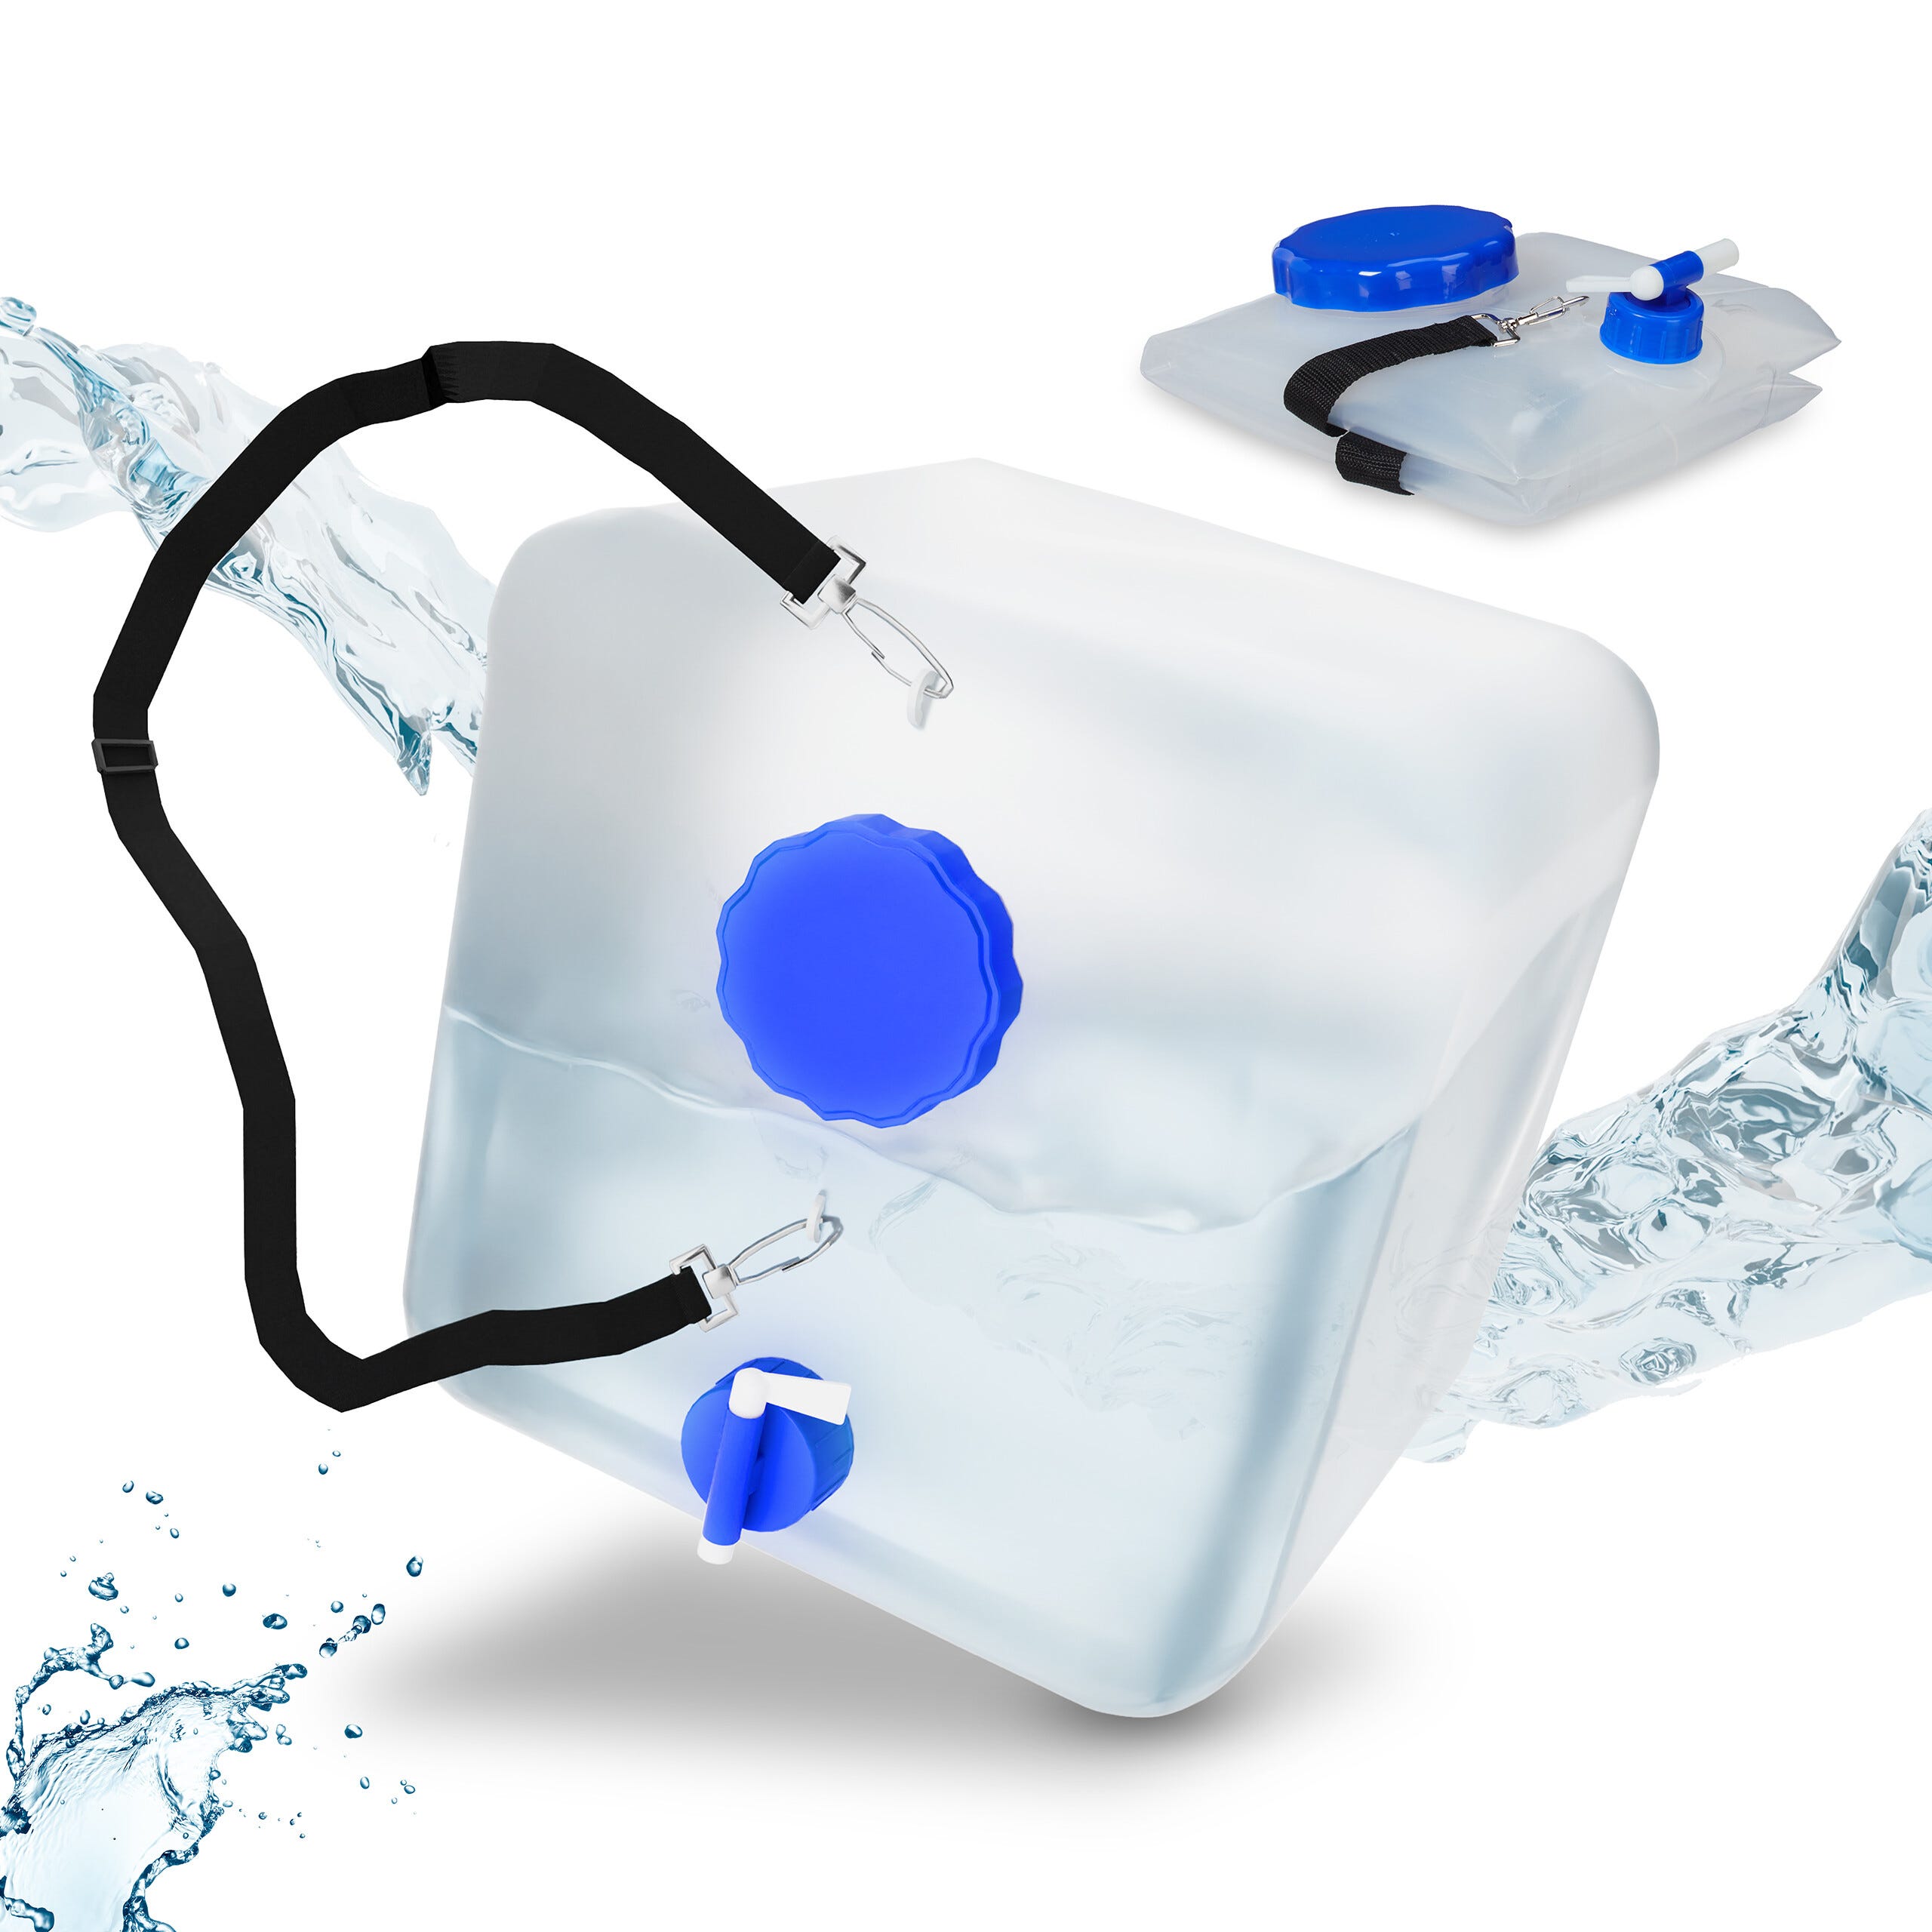 Relaxdays Bidon d'eau avec robinet, 25 litres, plastique sans BPA